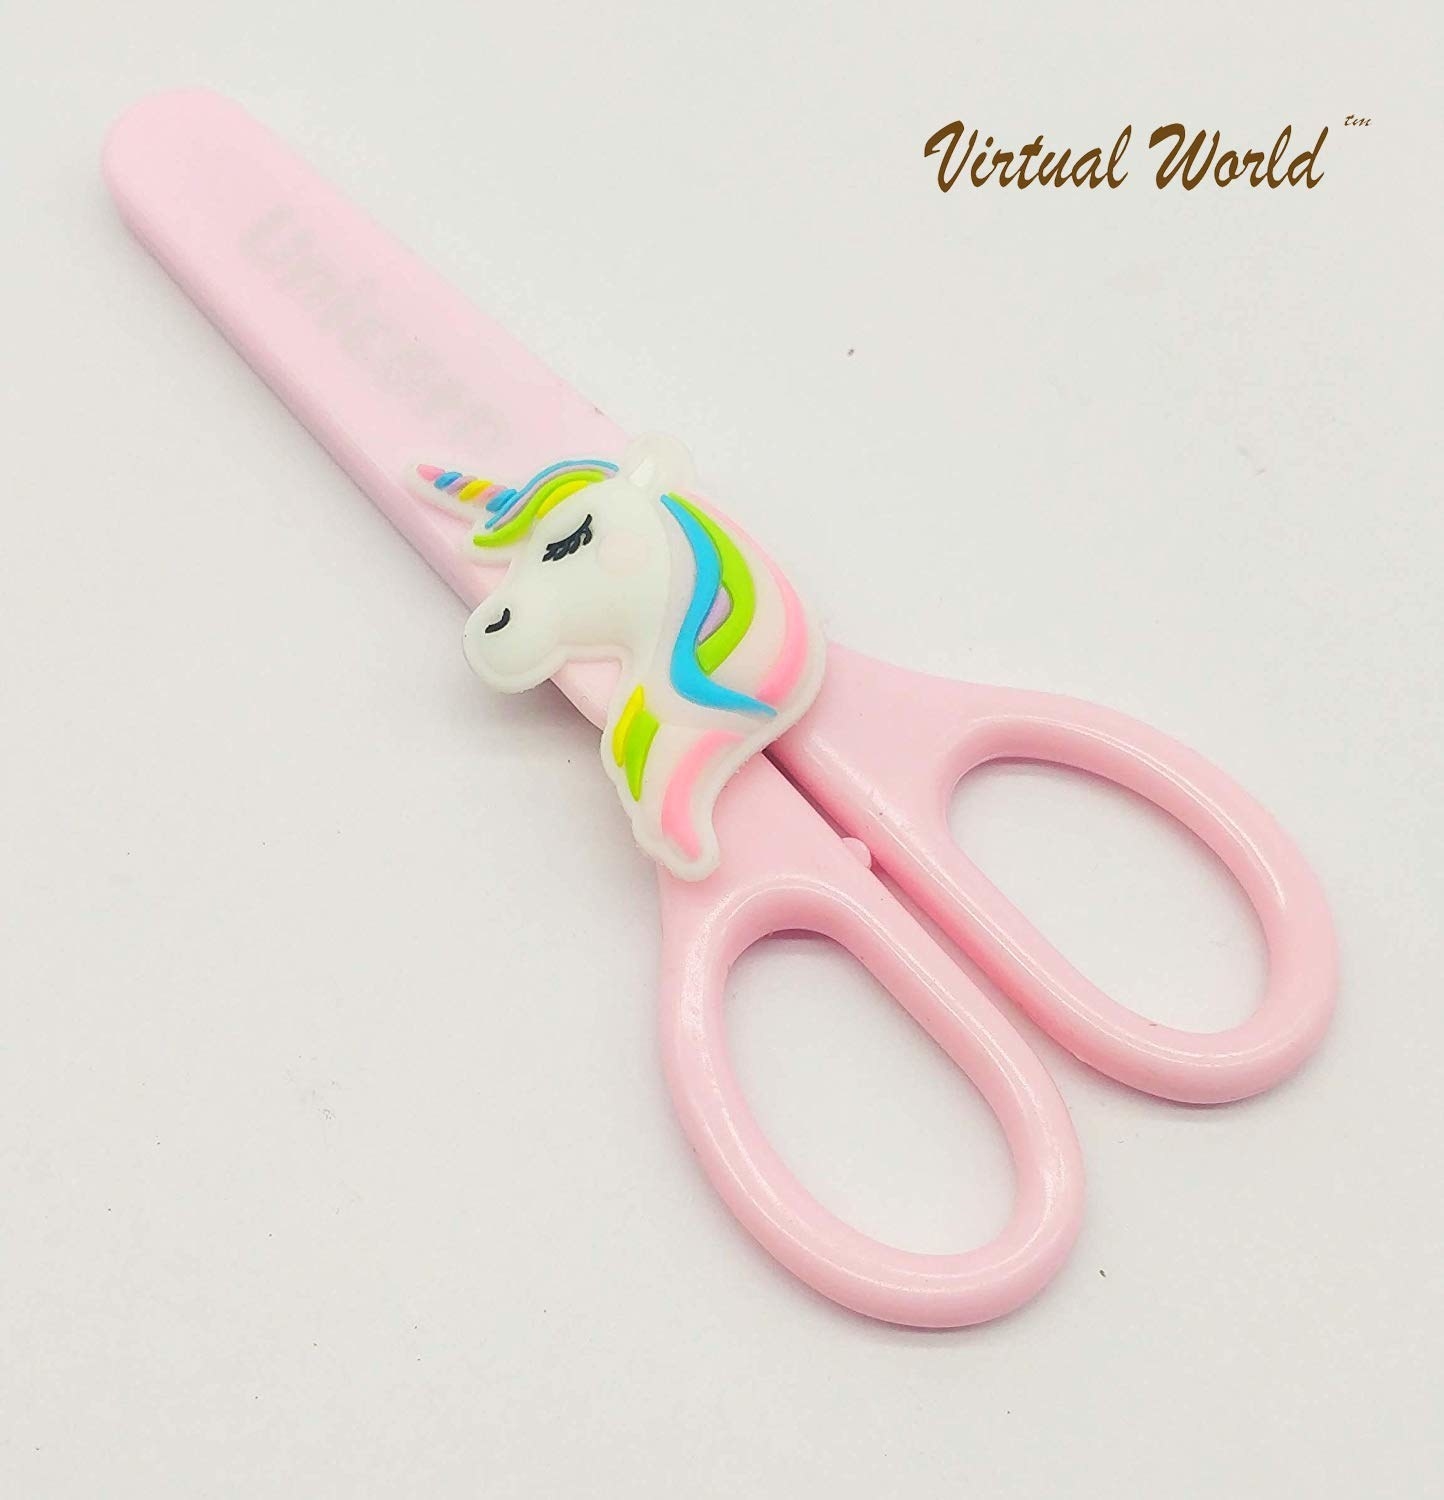 A pair of pink unicorn scissors